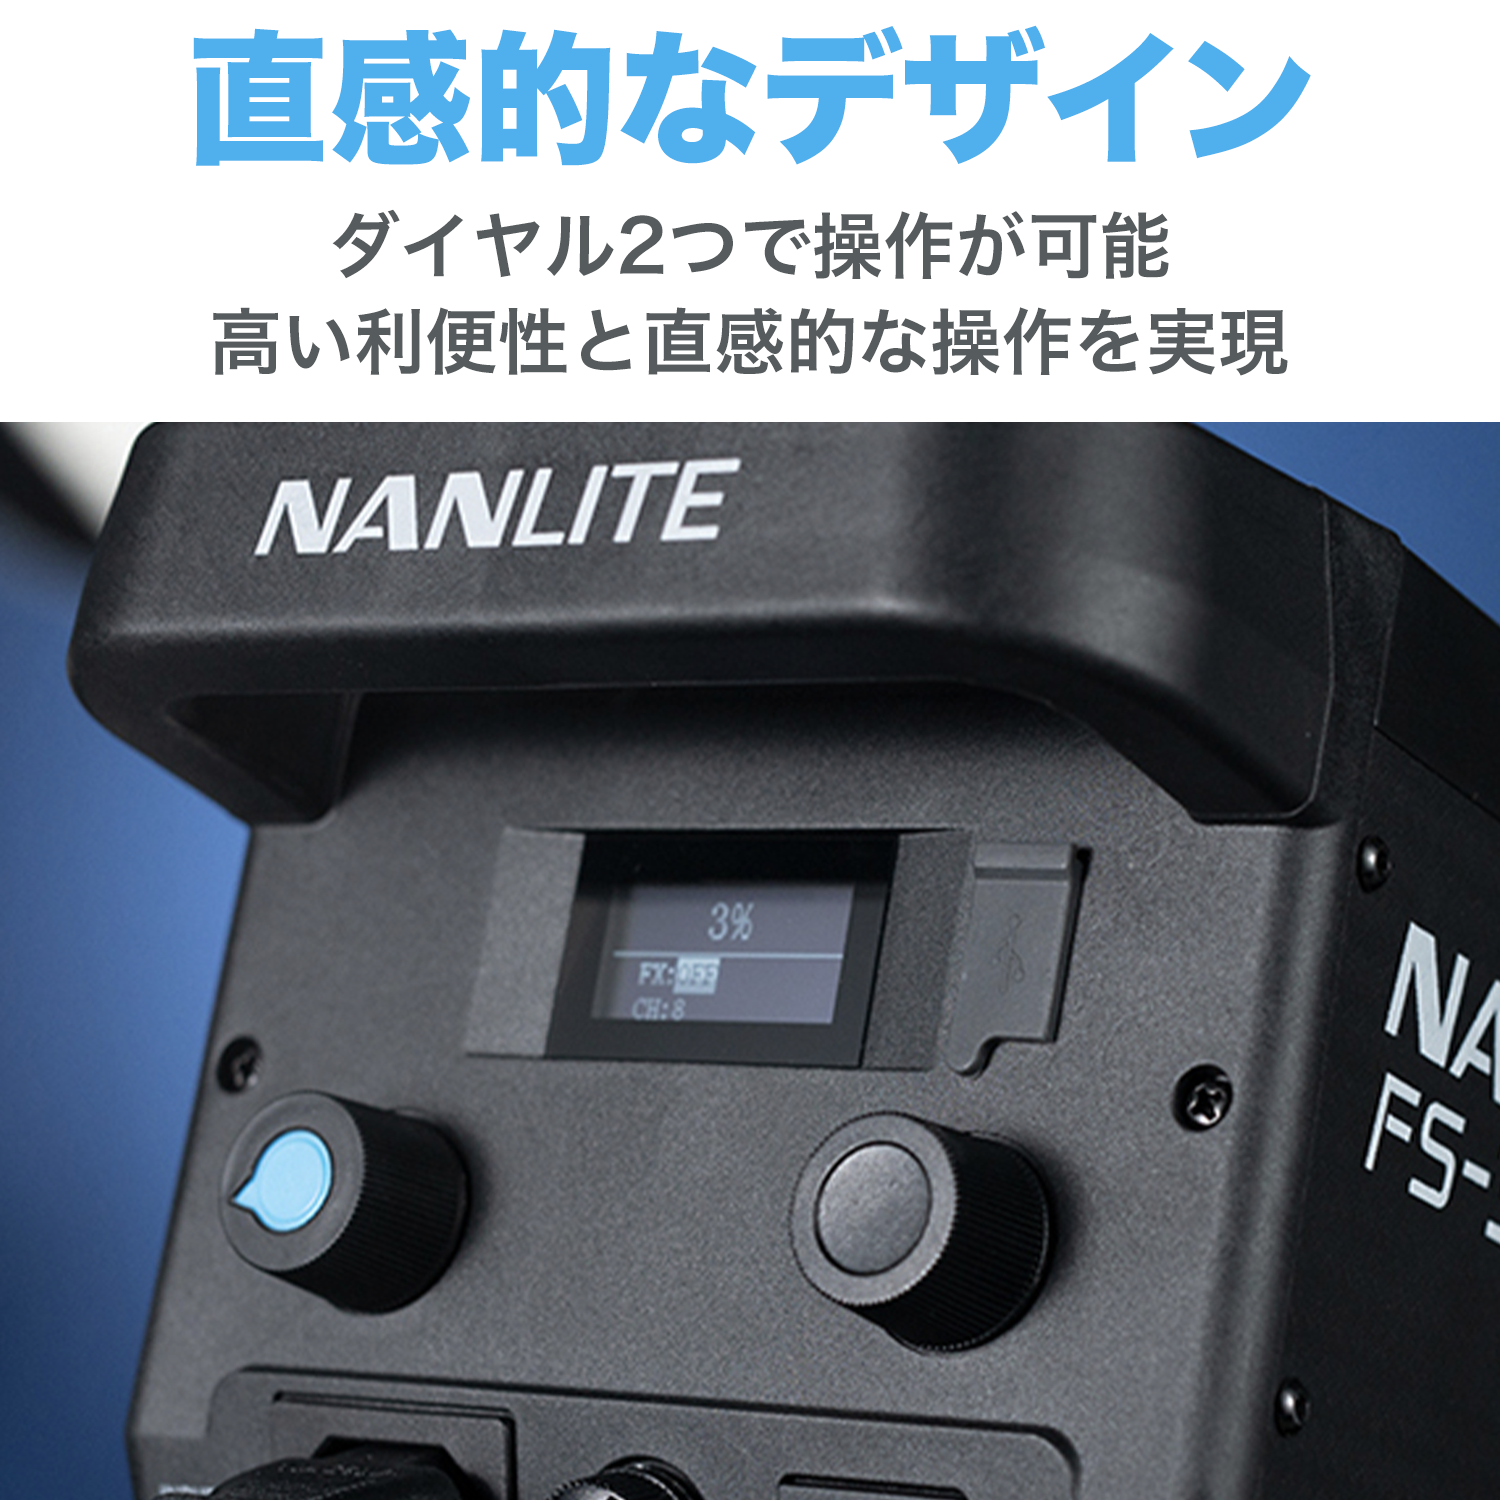 NANLITE FS-300 ナンライト 撮影用ライト スタジオライト LEDライト